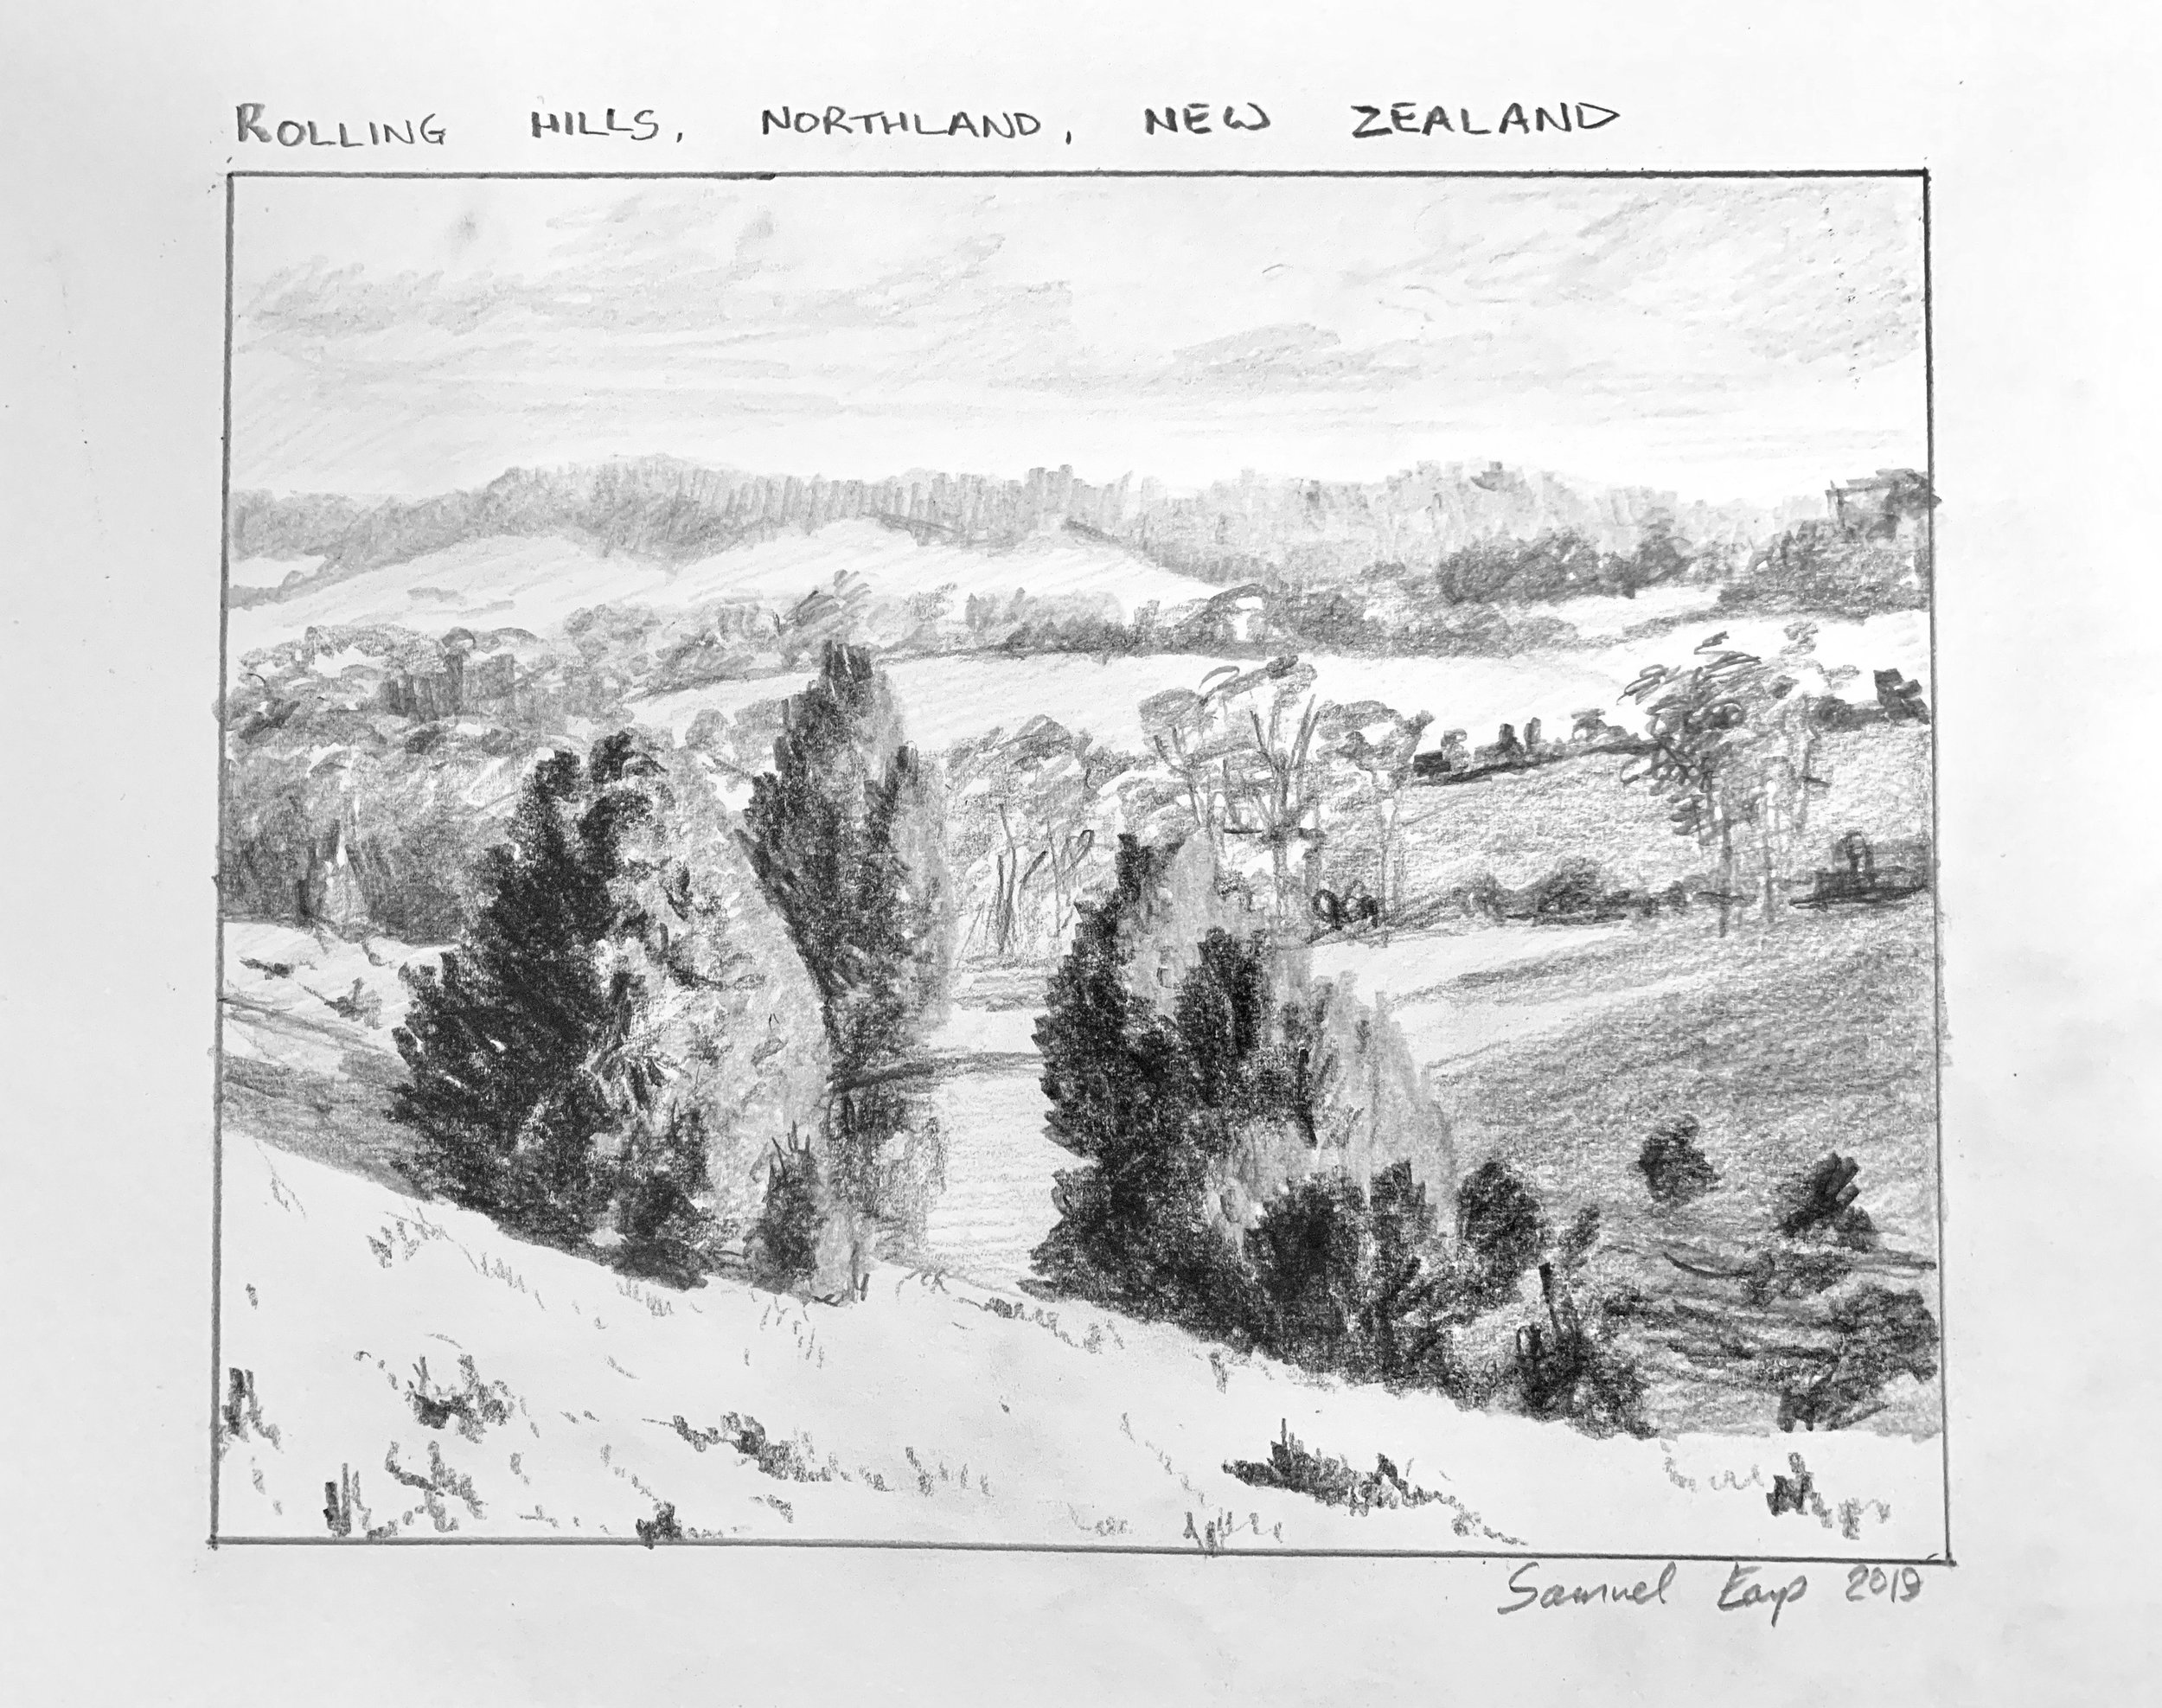 Rolling Hills Northalnd - pencil drawing - Samuel Earp.jpeg